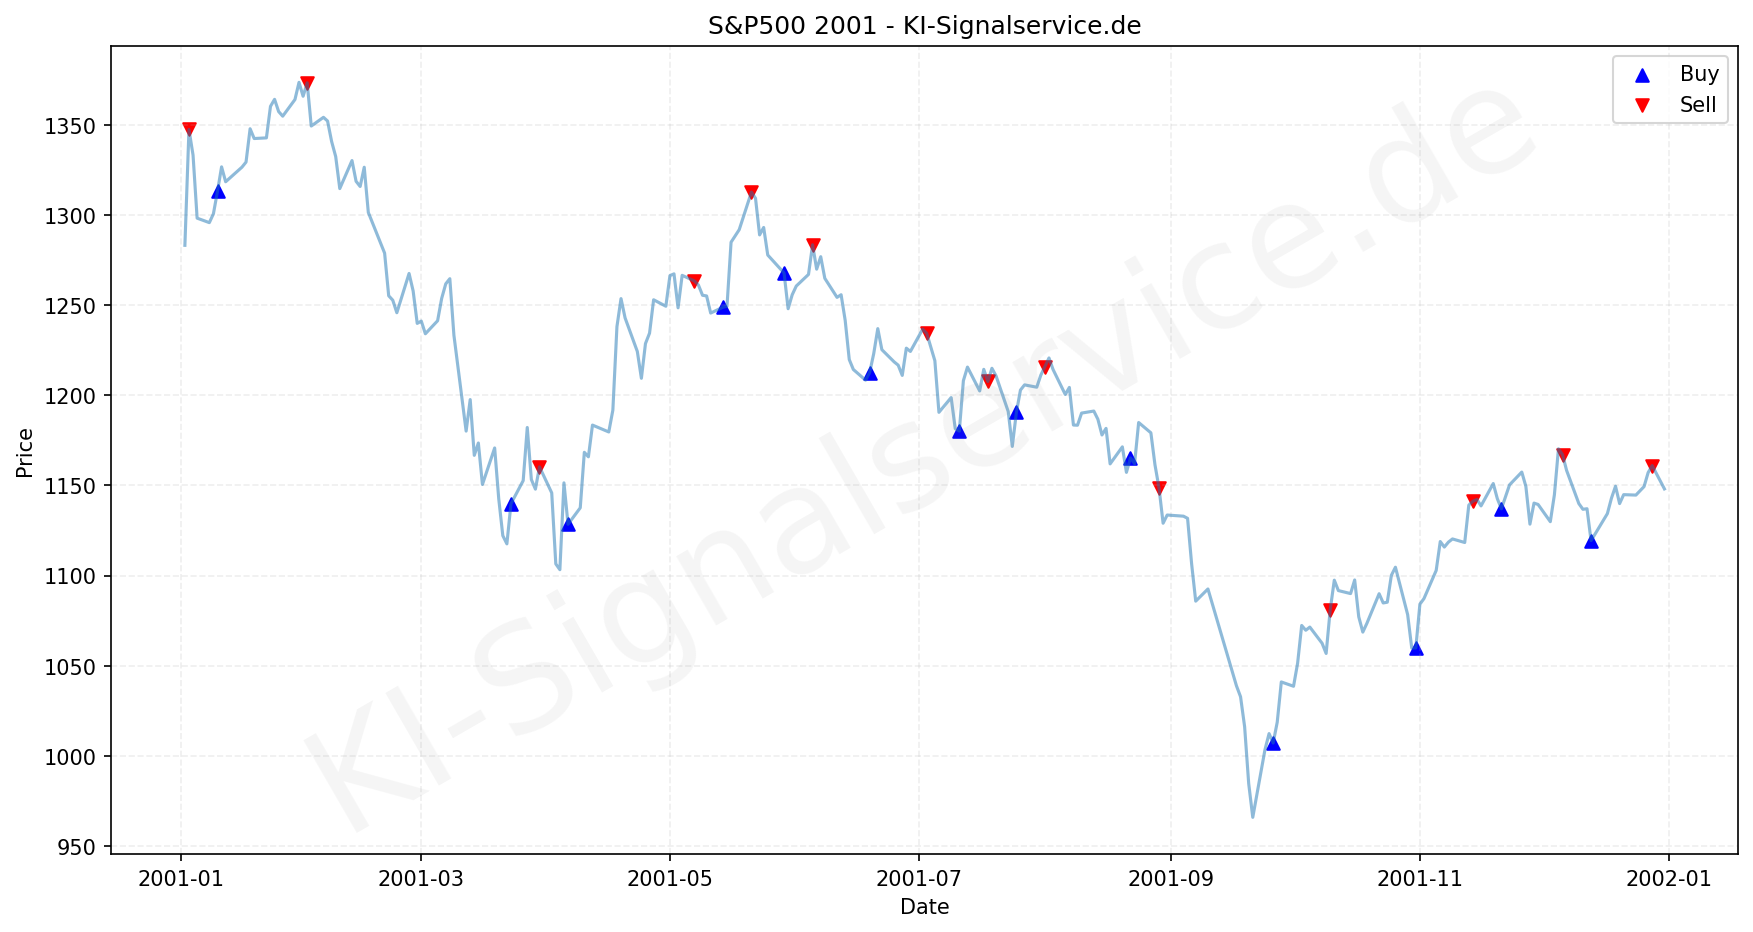 SP500 Index Performance Chart - KI Tradingsignale 2001